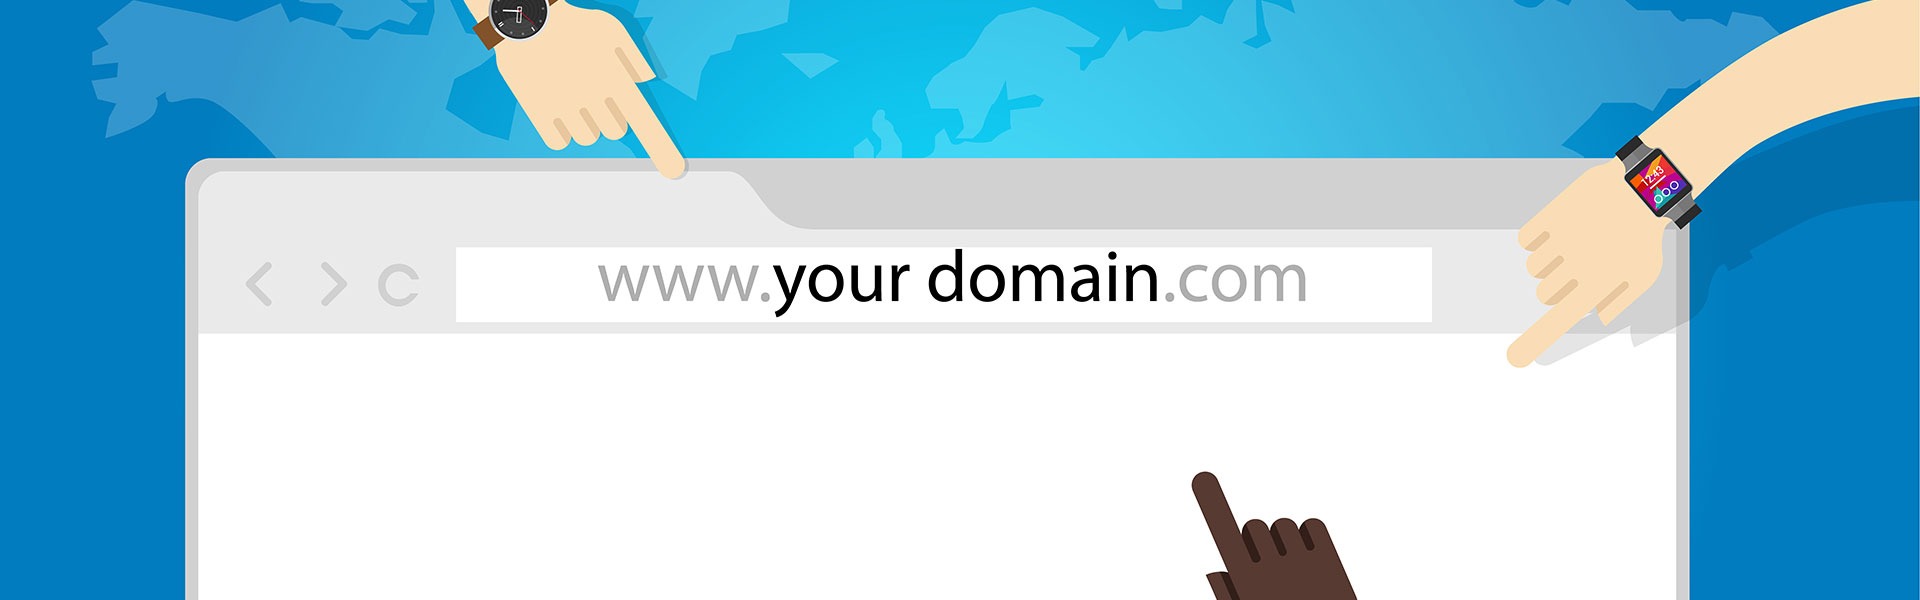 Name site ru. Домен картинка. Доменное имя фон. Фотографии домен нарисованные. Domain purchase.